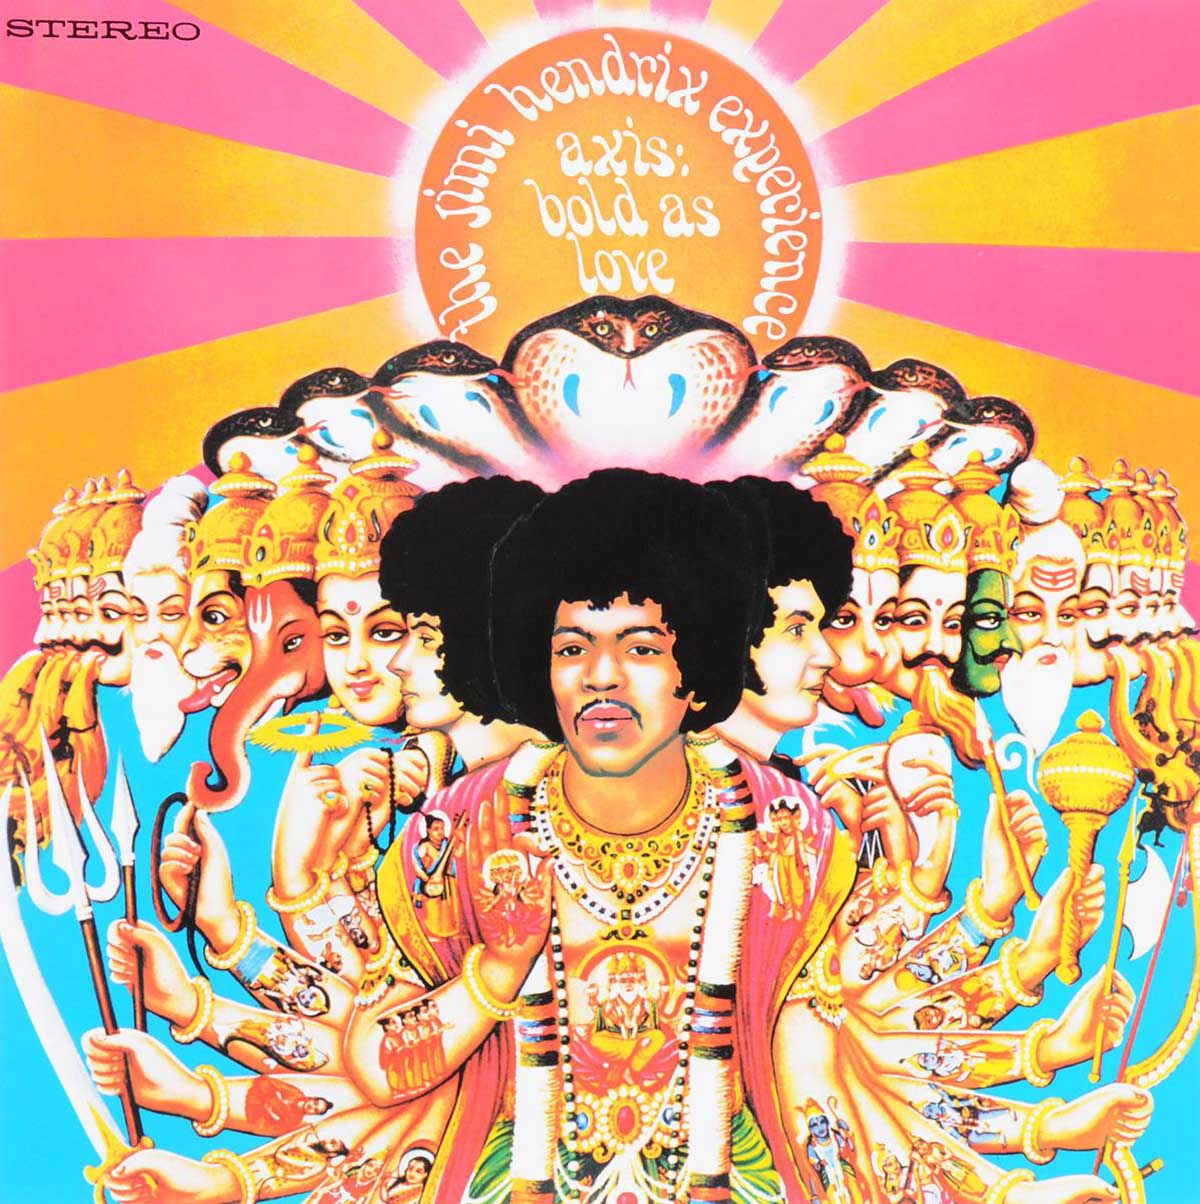 Reprise de "Axis : Bold As Love" (1967) par Jimi Hendrix